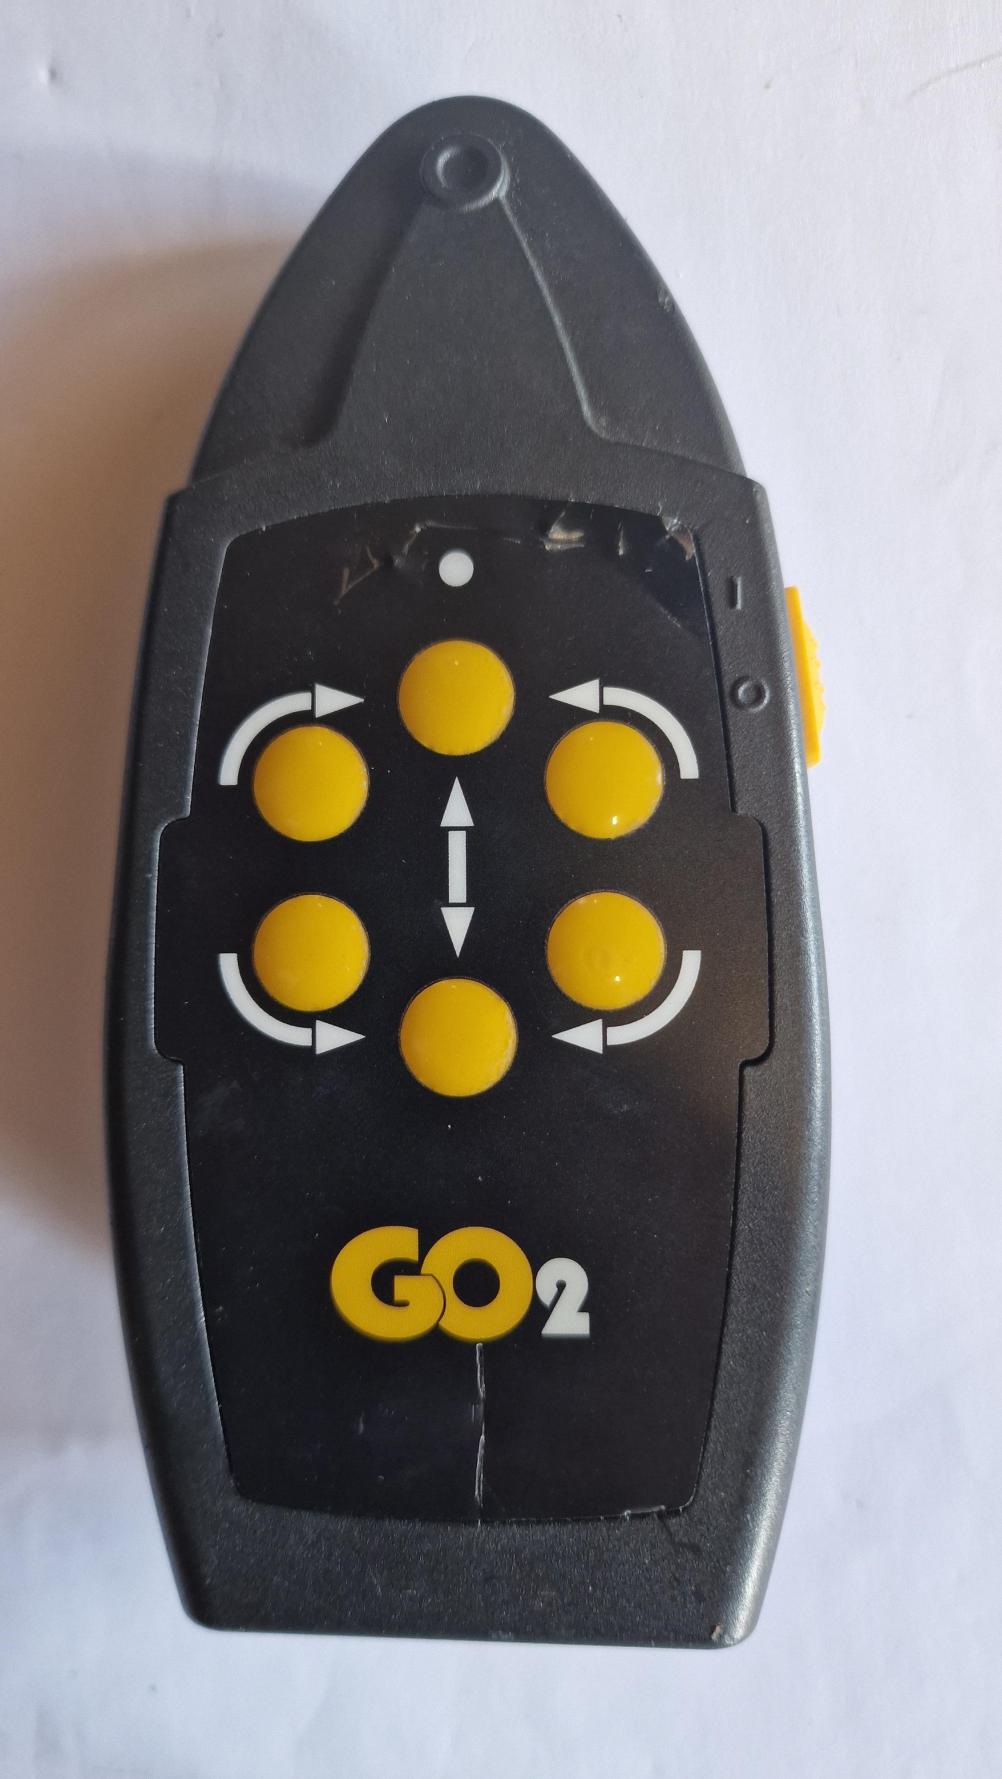 Go2  Remote Control - Front Image